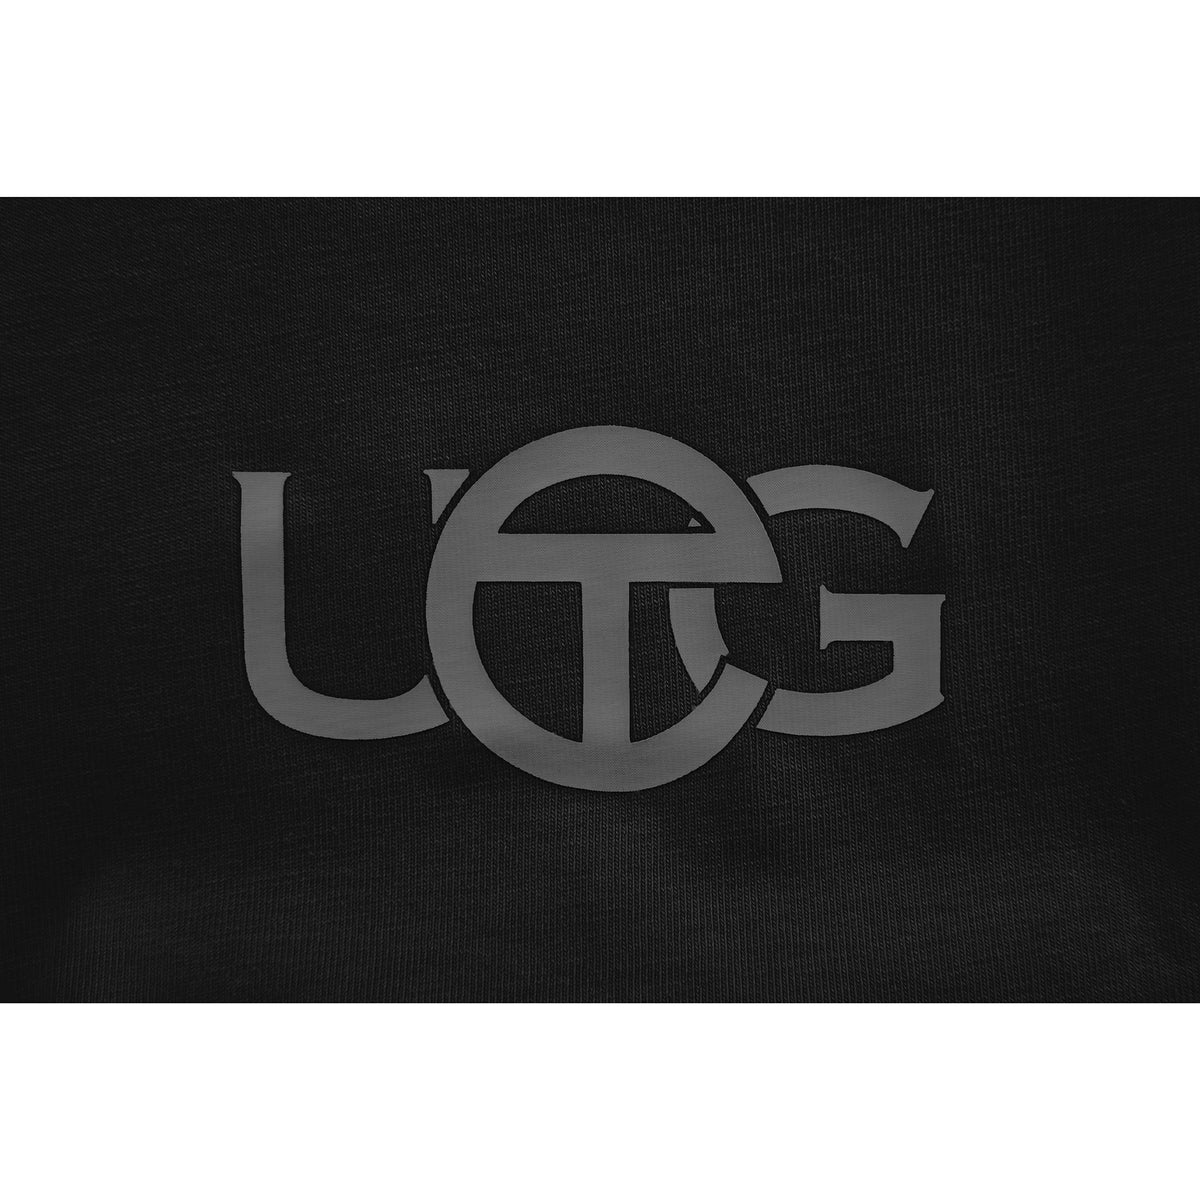 UGG x Telfar Logo Tee - Black